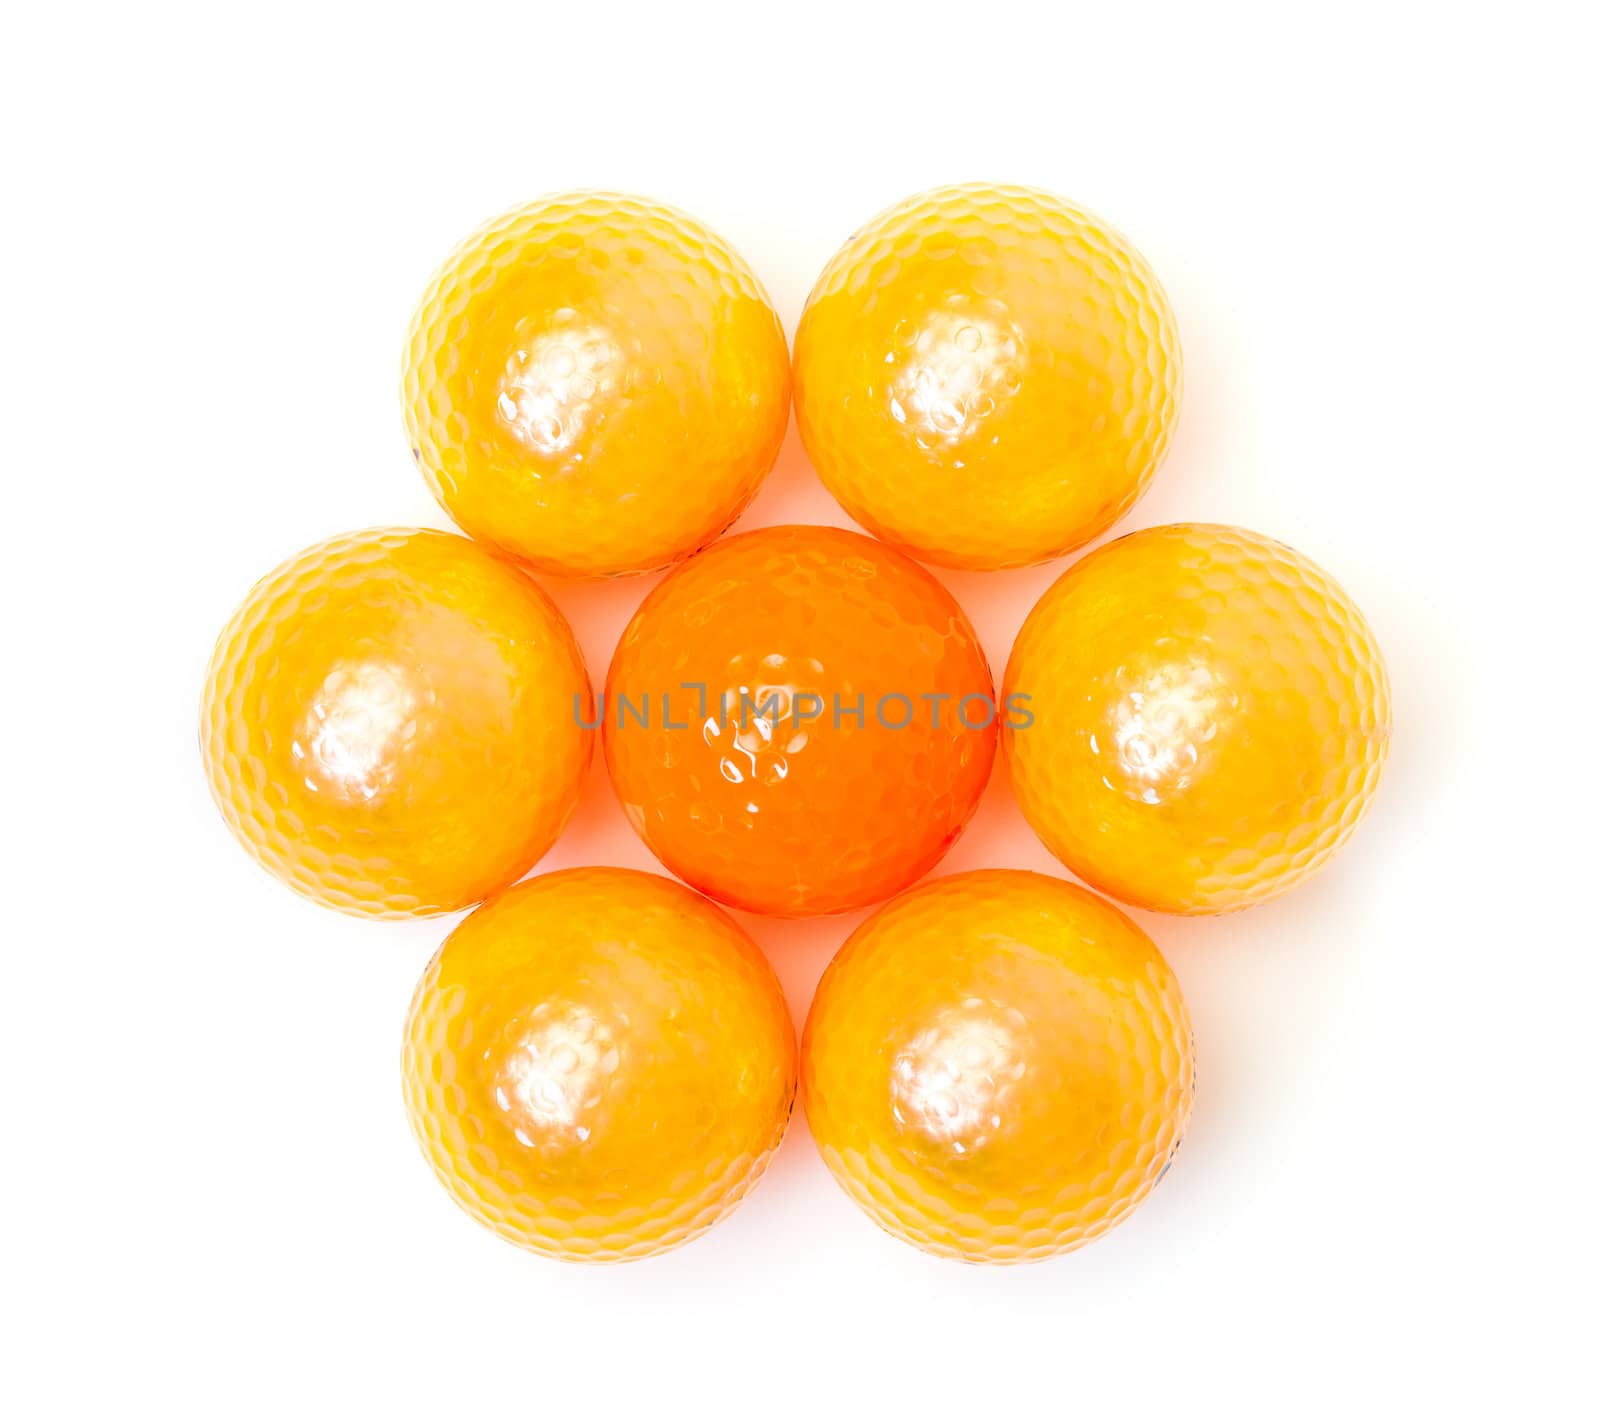 Orange and golden golf balls on white background